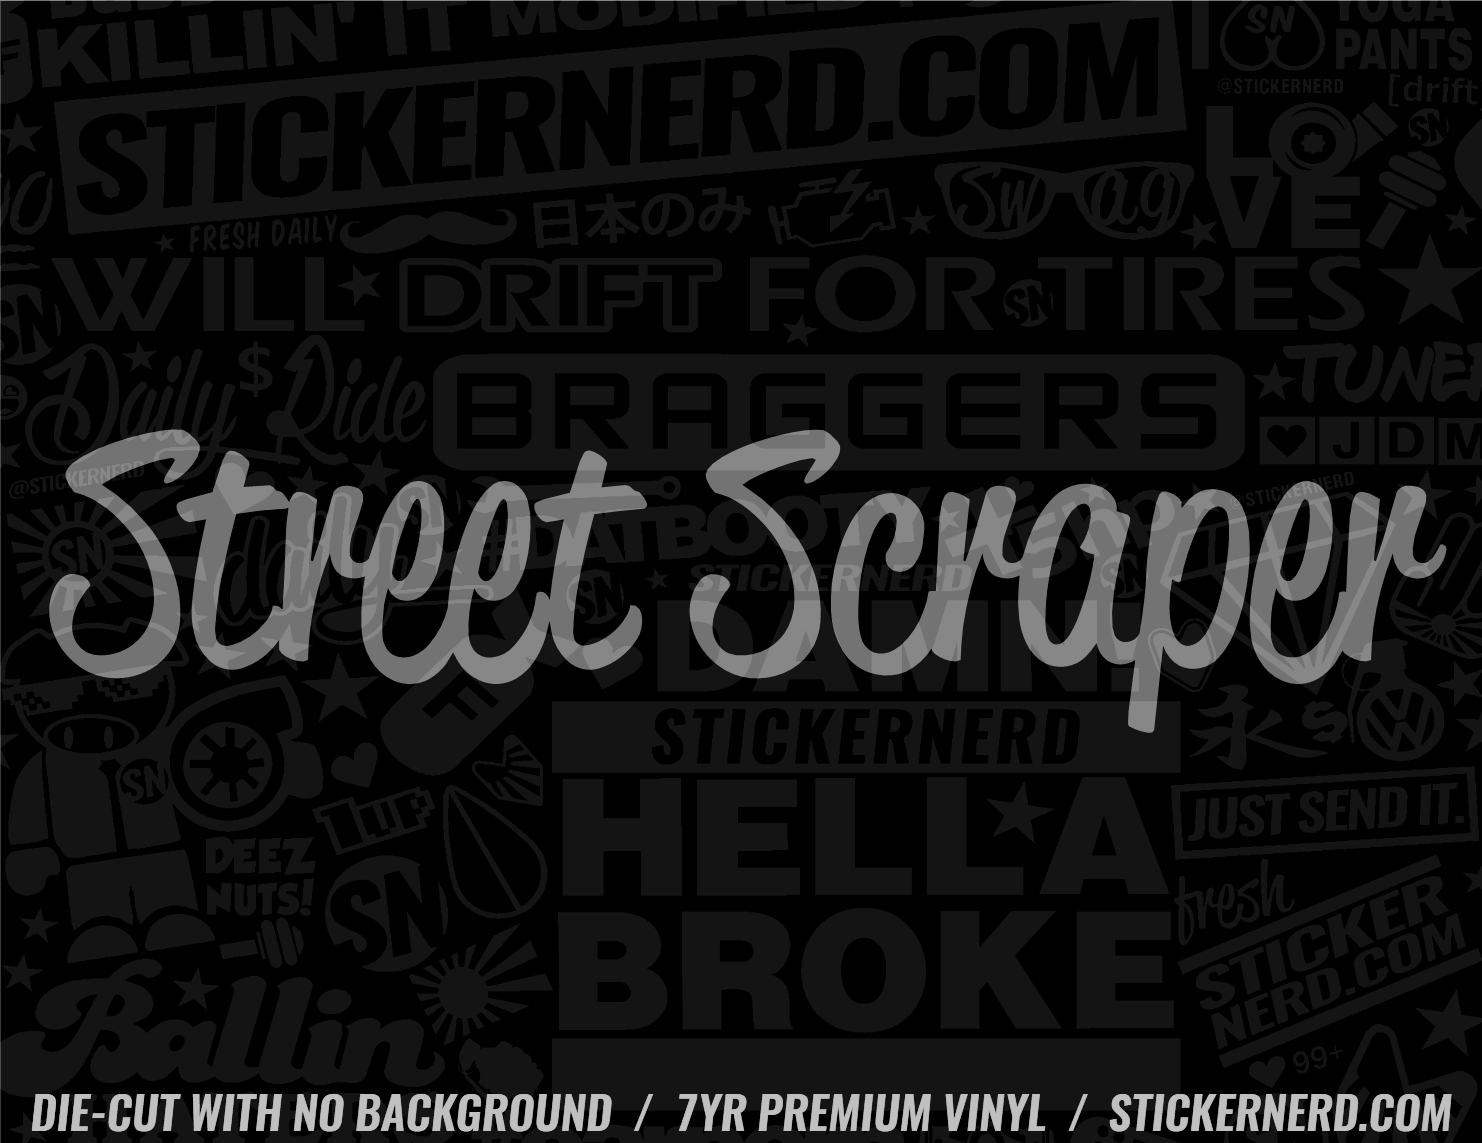 Street Scraper Sticker - Window Decal - STICKERNERD.COM